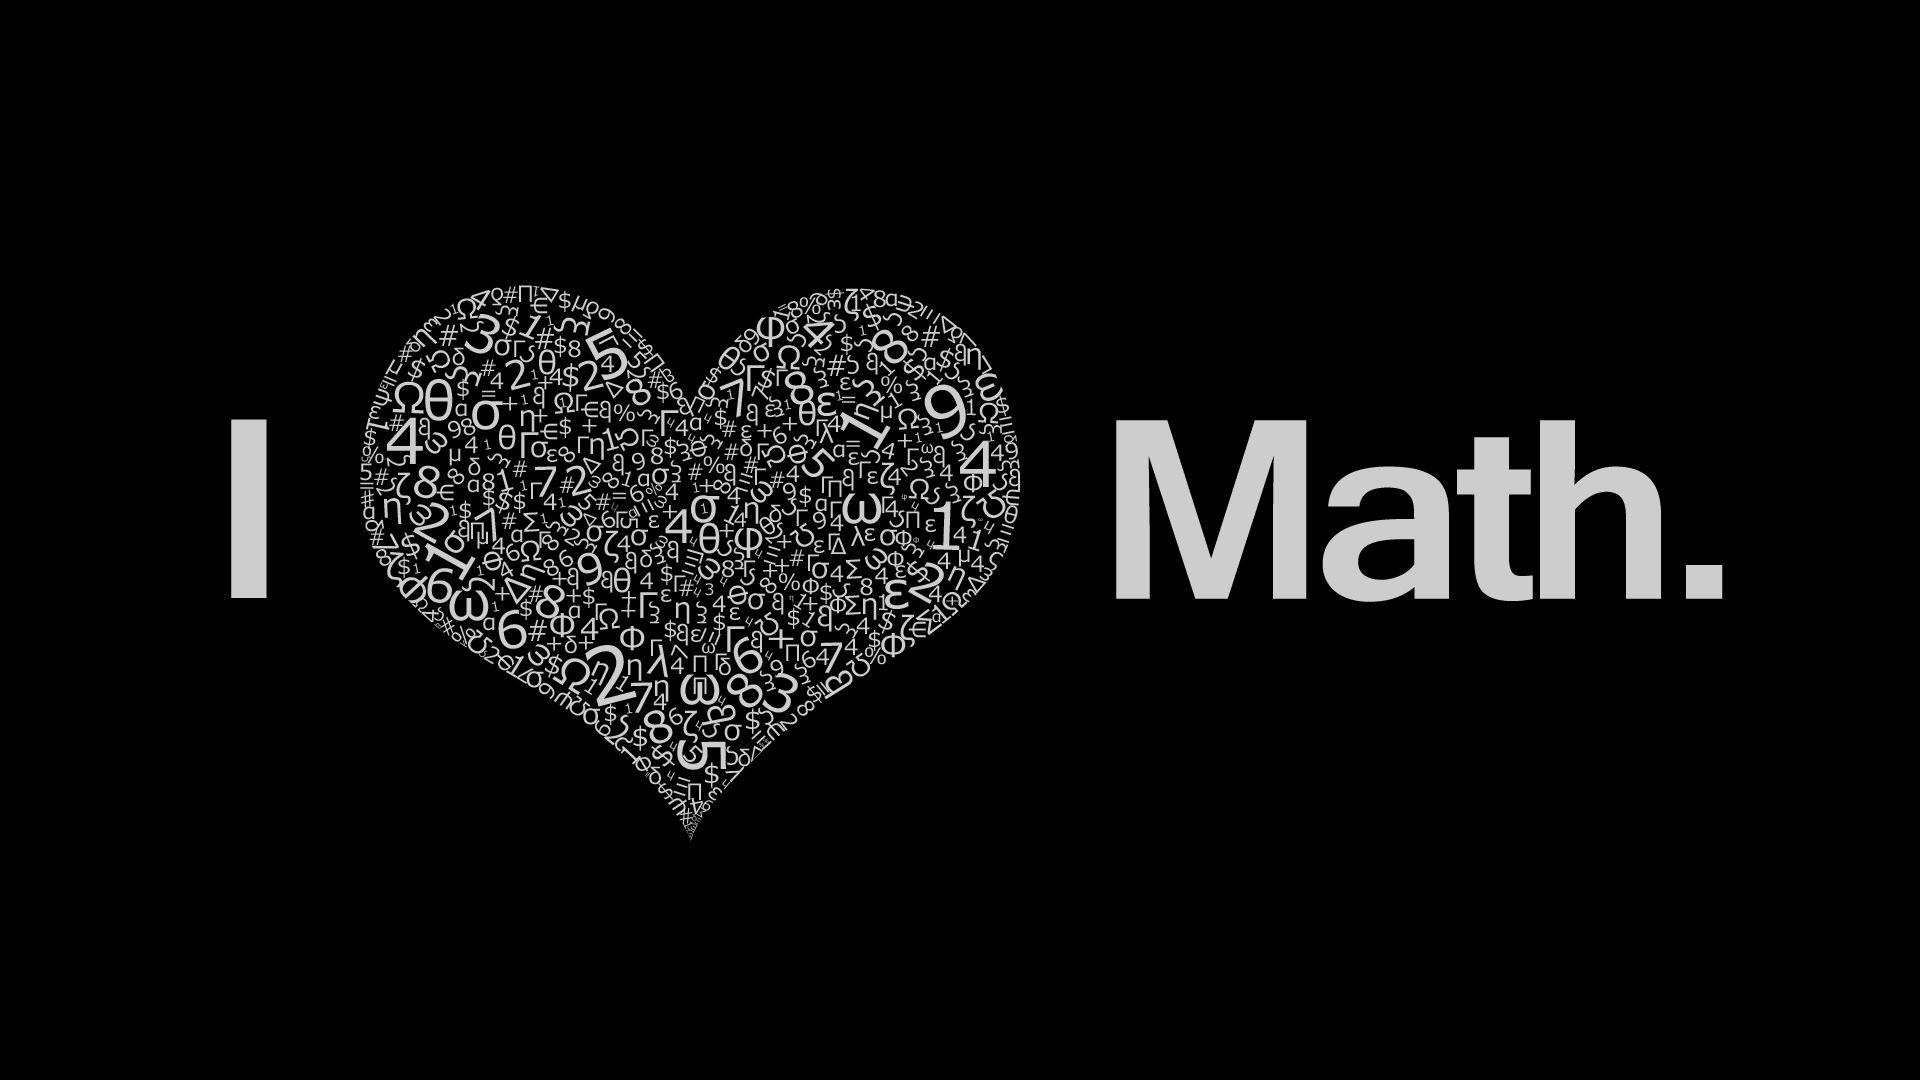 I Love Math wallpaper. Nerdy. Math, Family math night